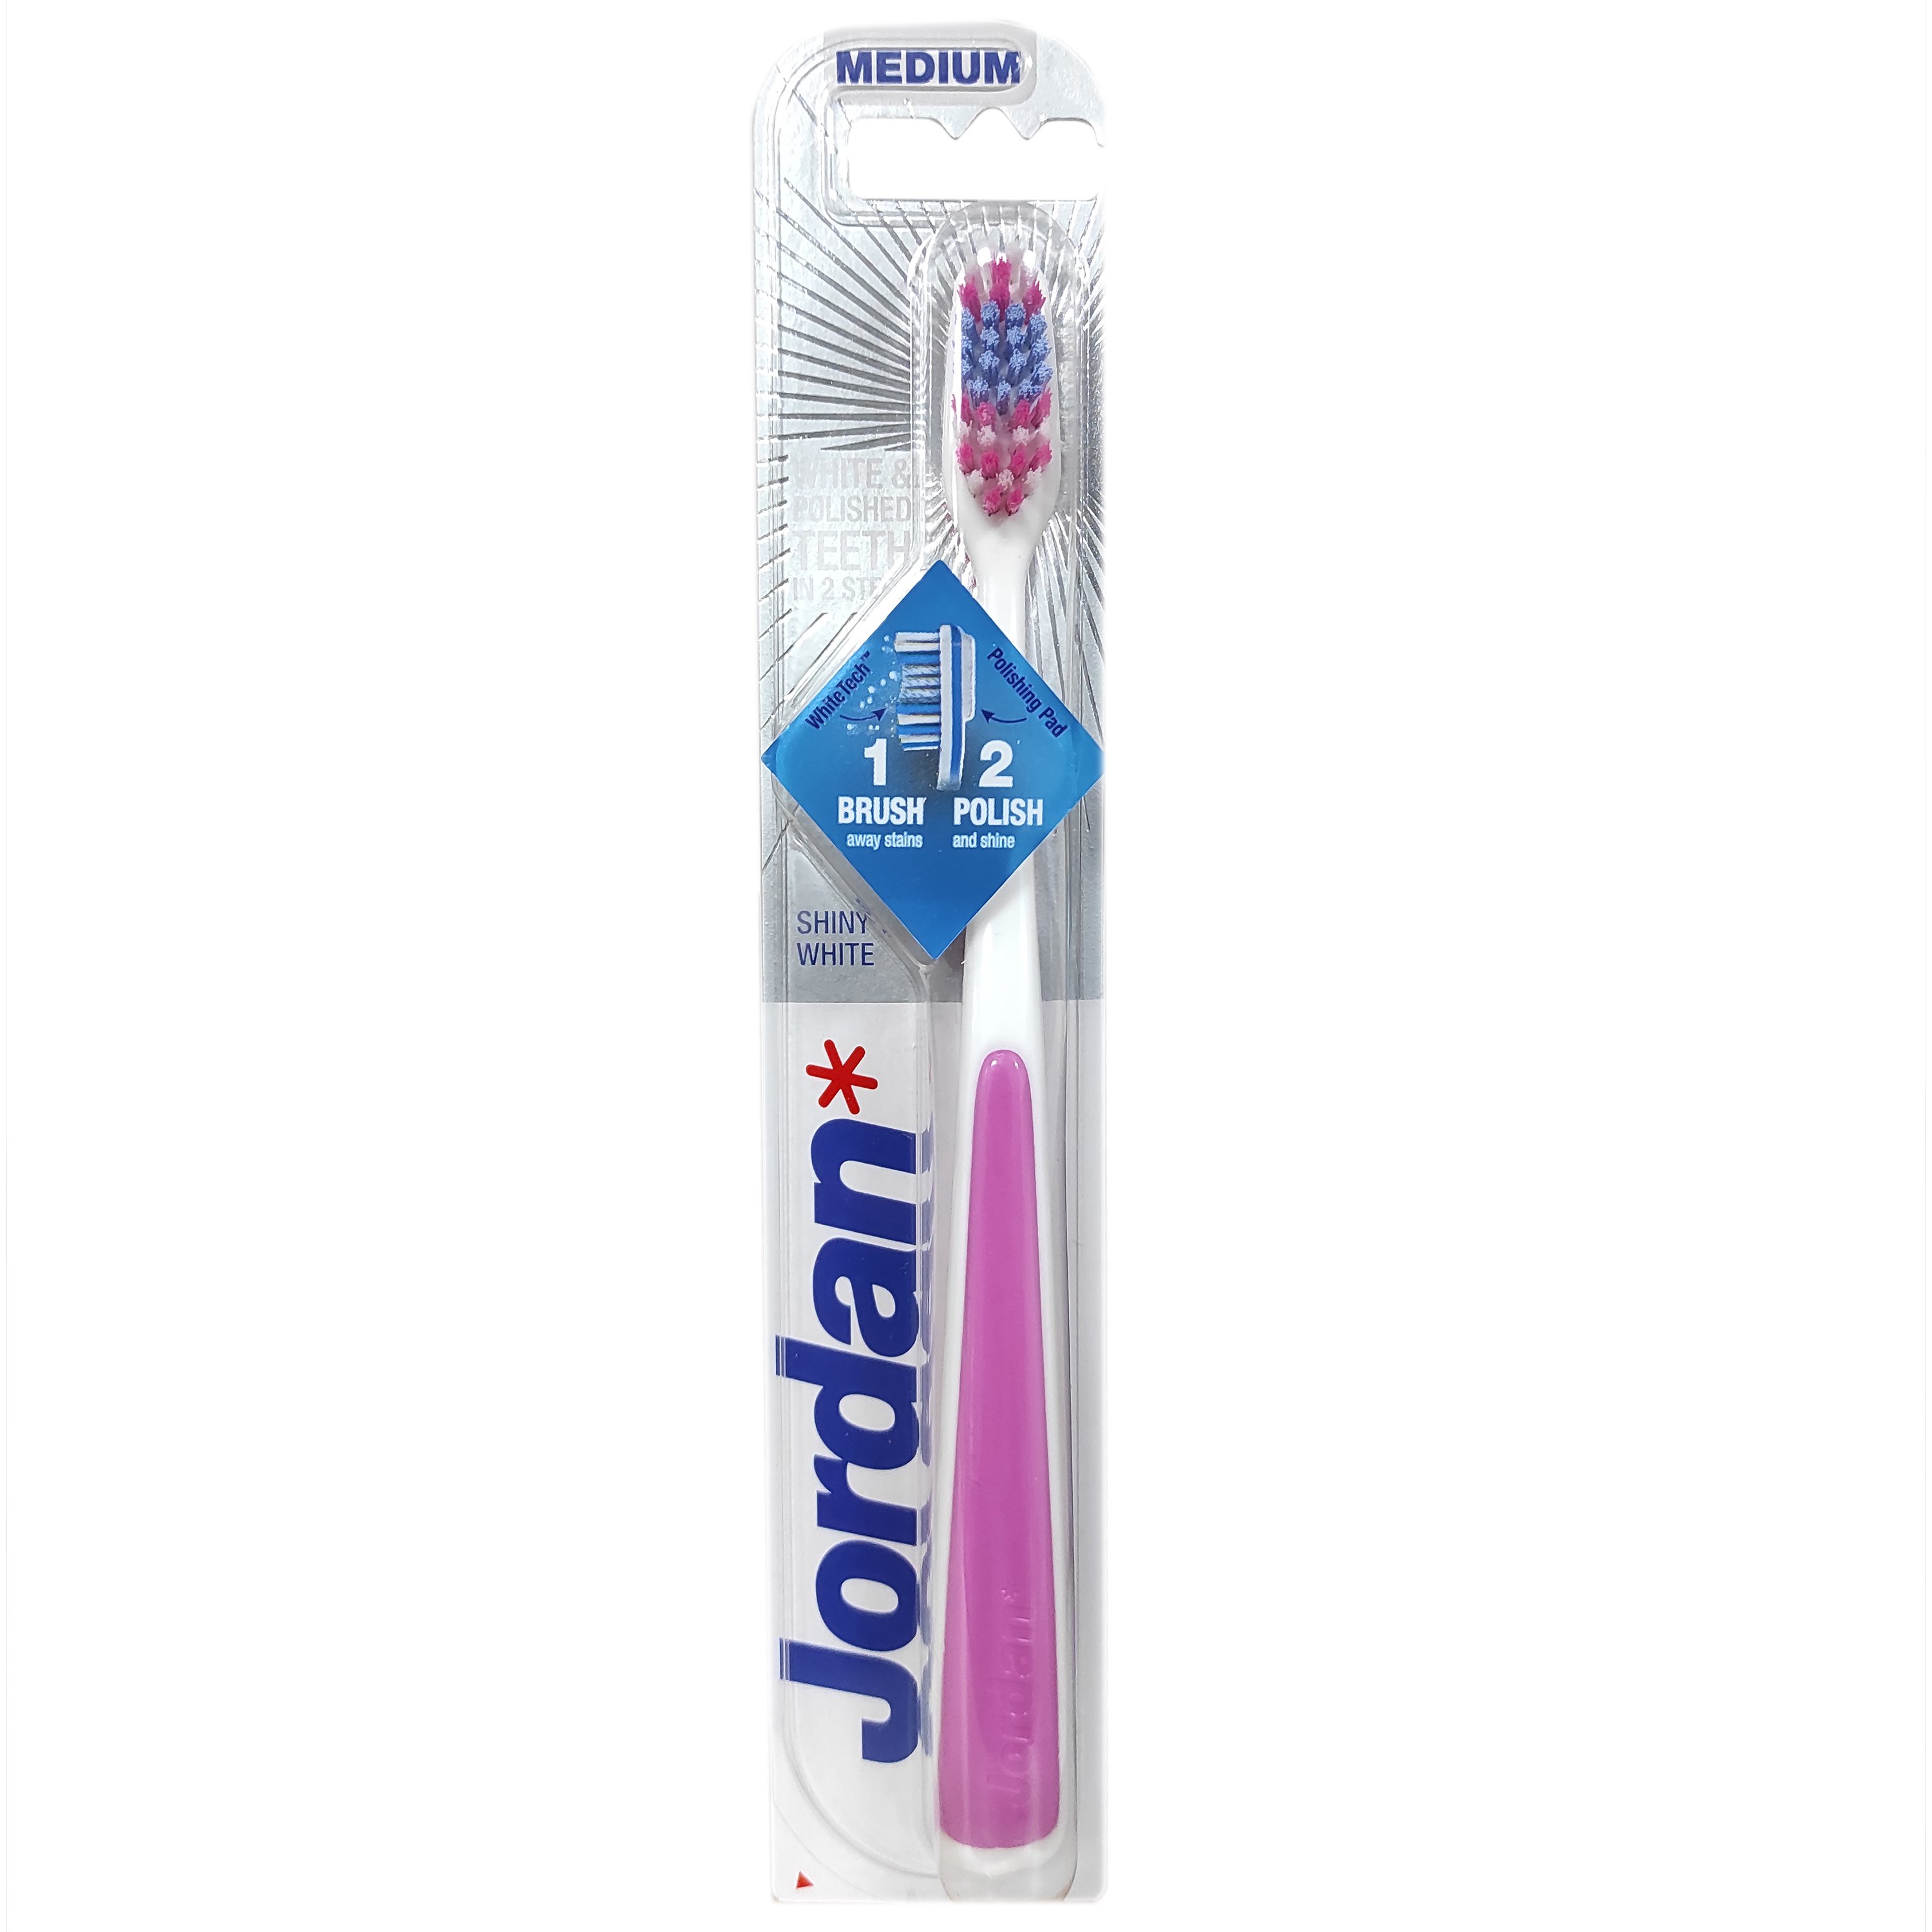 Jordan Shiny White Toothbrush Medium Μέτρια Οδοντόβουρτσα για Βαθύ Καθαρισμό & Λεύκανση 1 Τεμάχιο – Ροζ